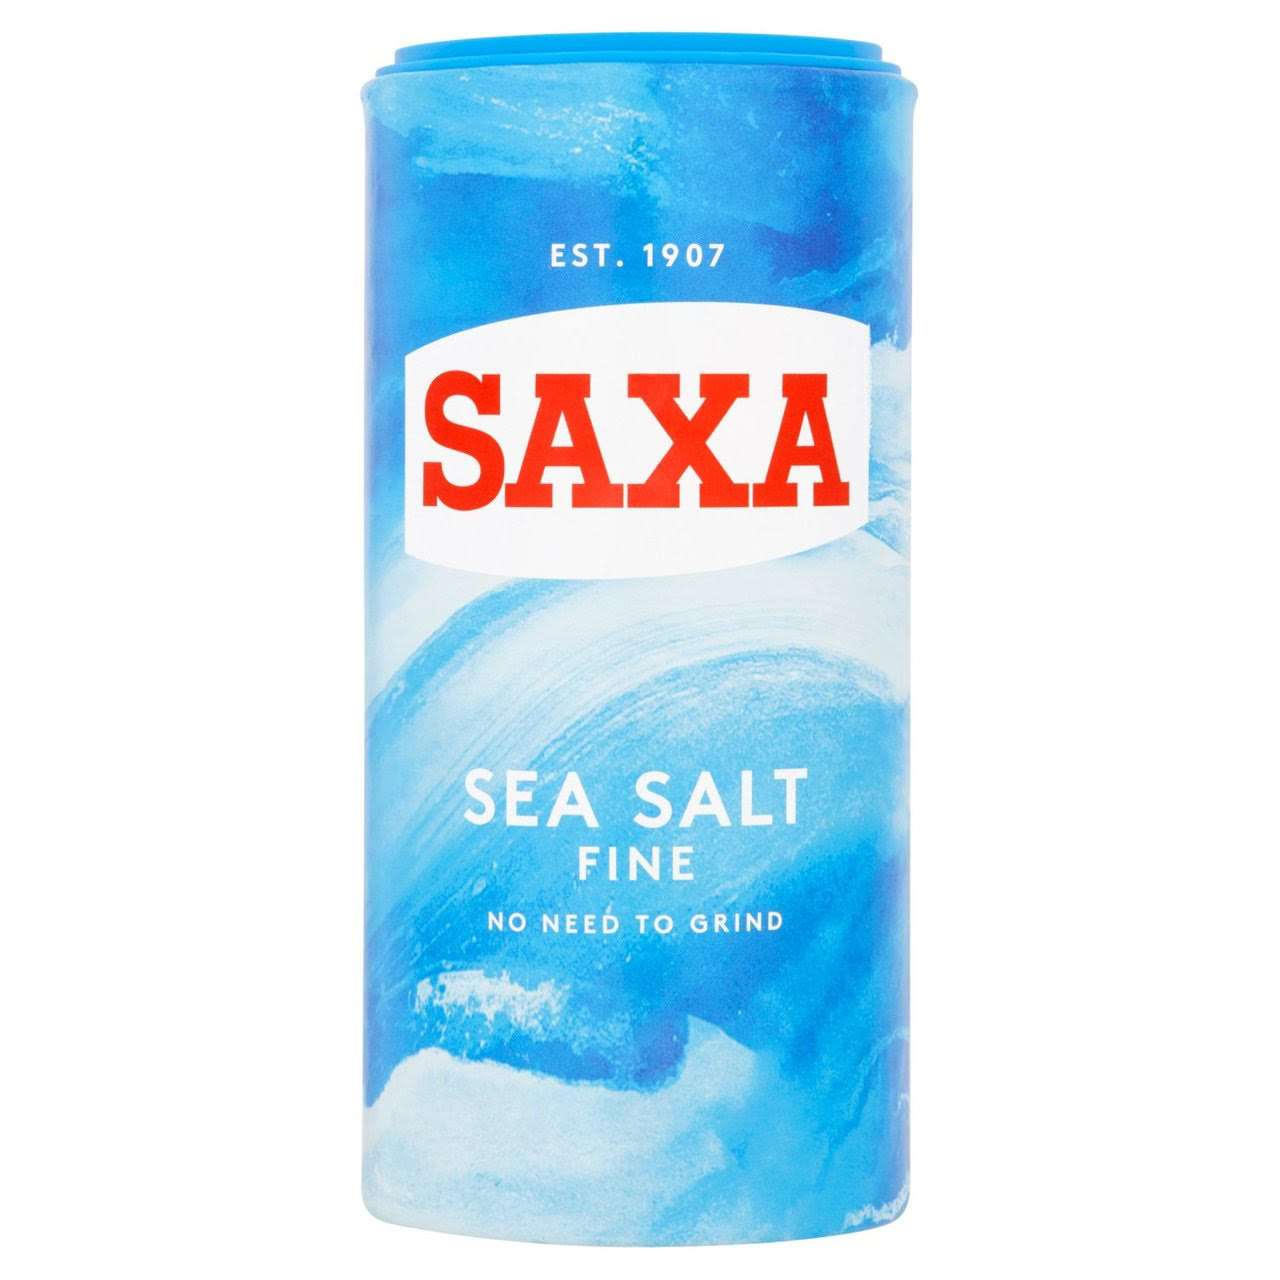 Saxa Fine Sea Salt Delivered to Canada